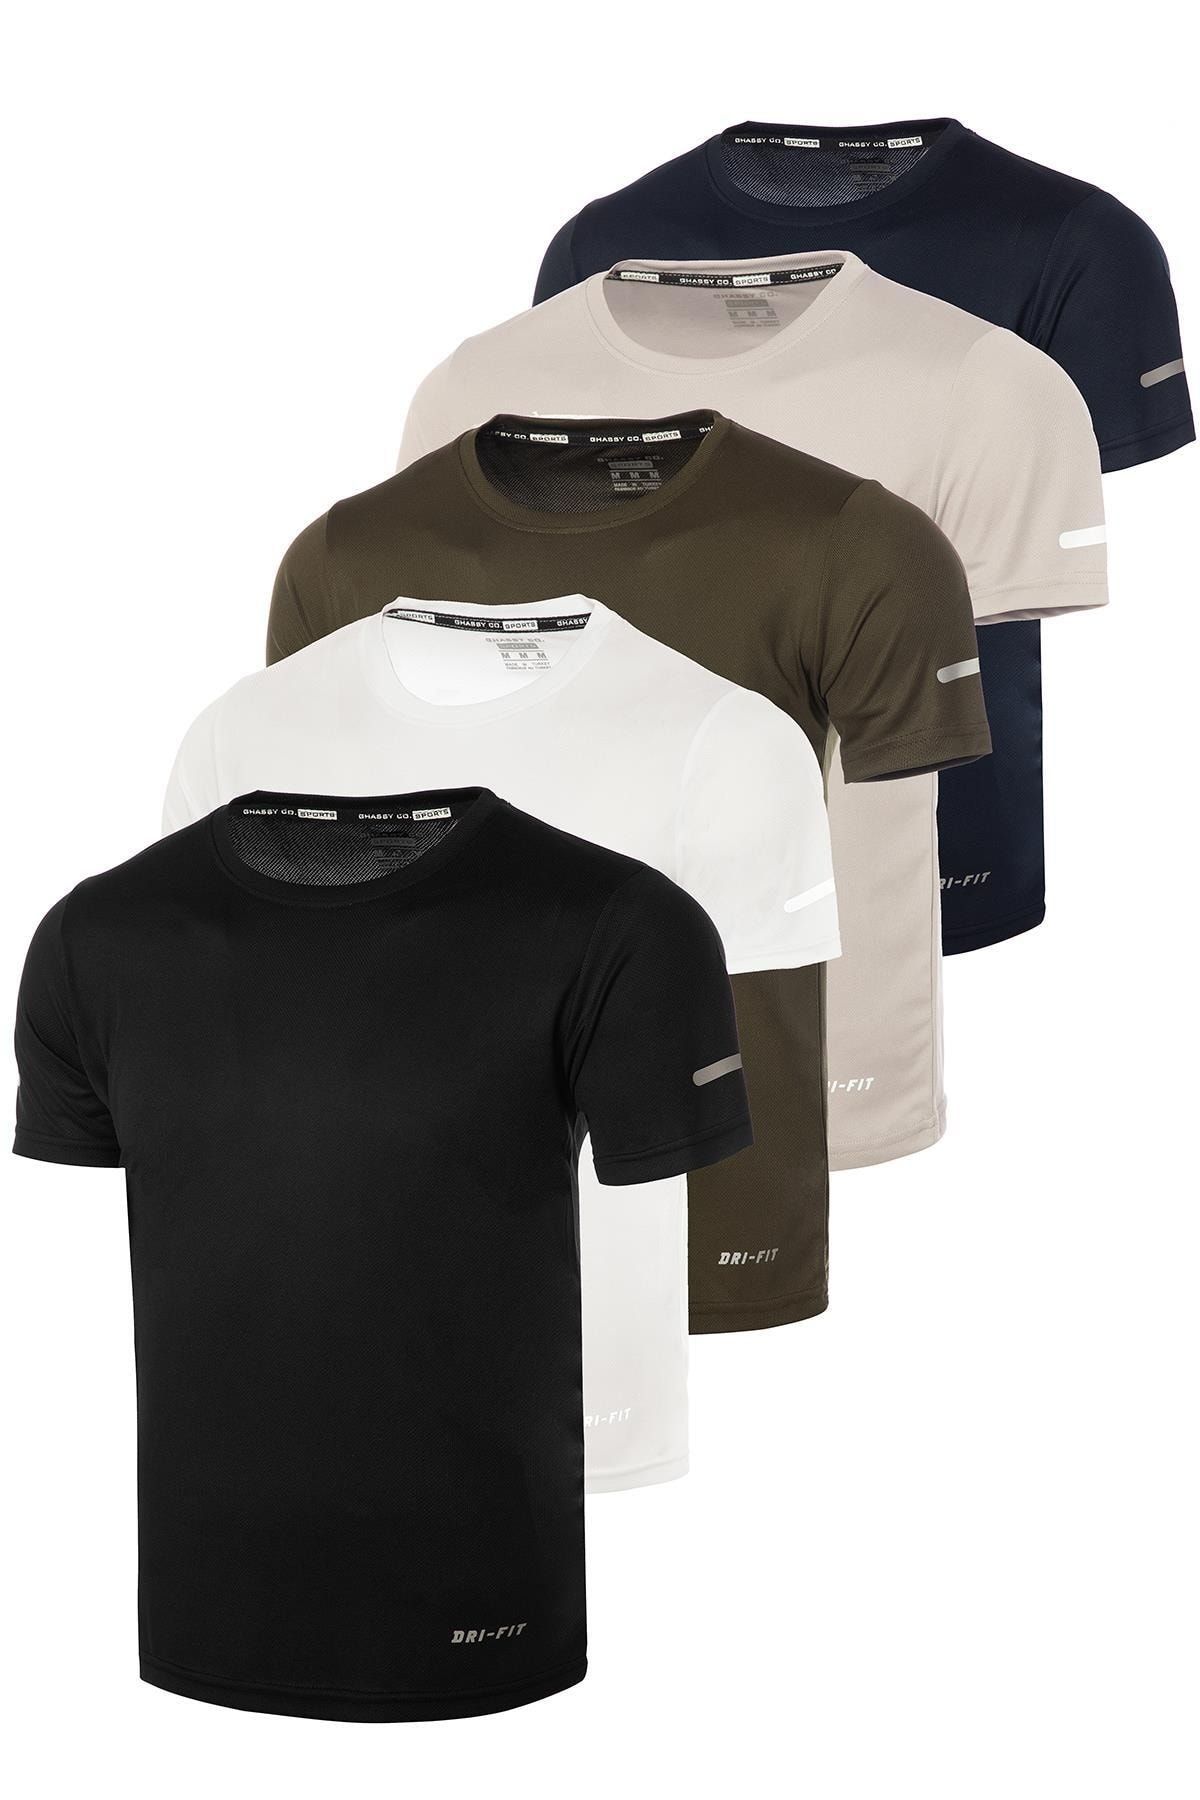 Ghassy Co Erkek 5'li Paket Dry Fit Siyah Lacivert Beyaz Haki Gri Atletik Nem Emici Günlük Tshirt